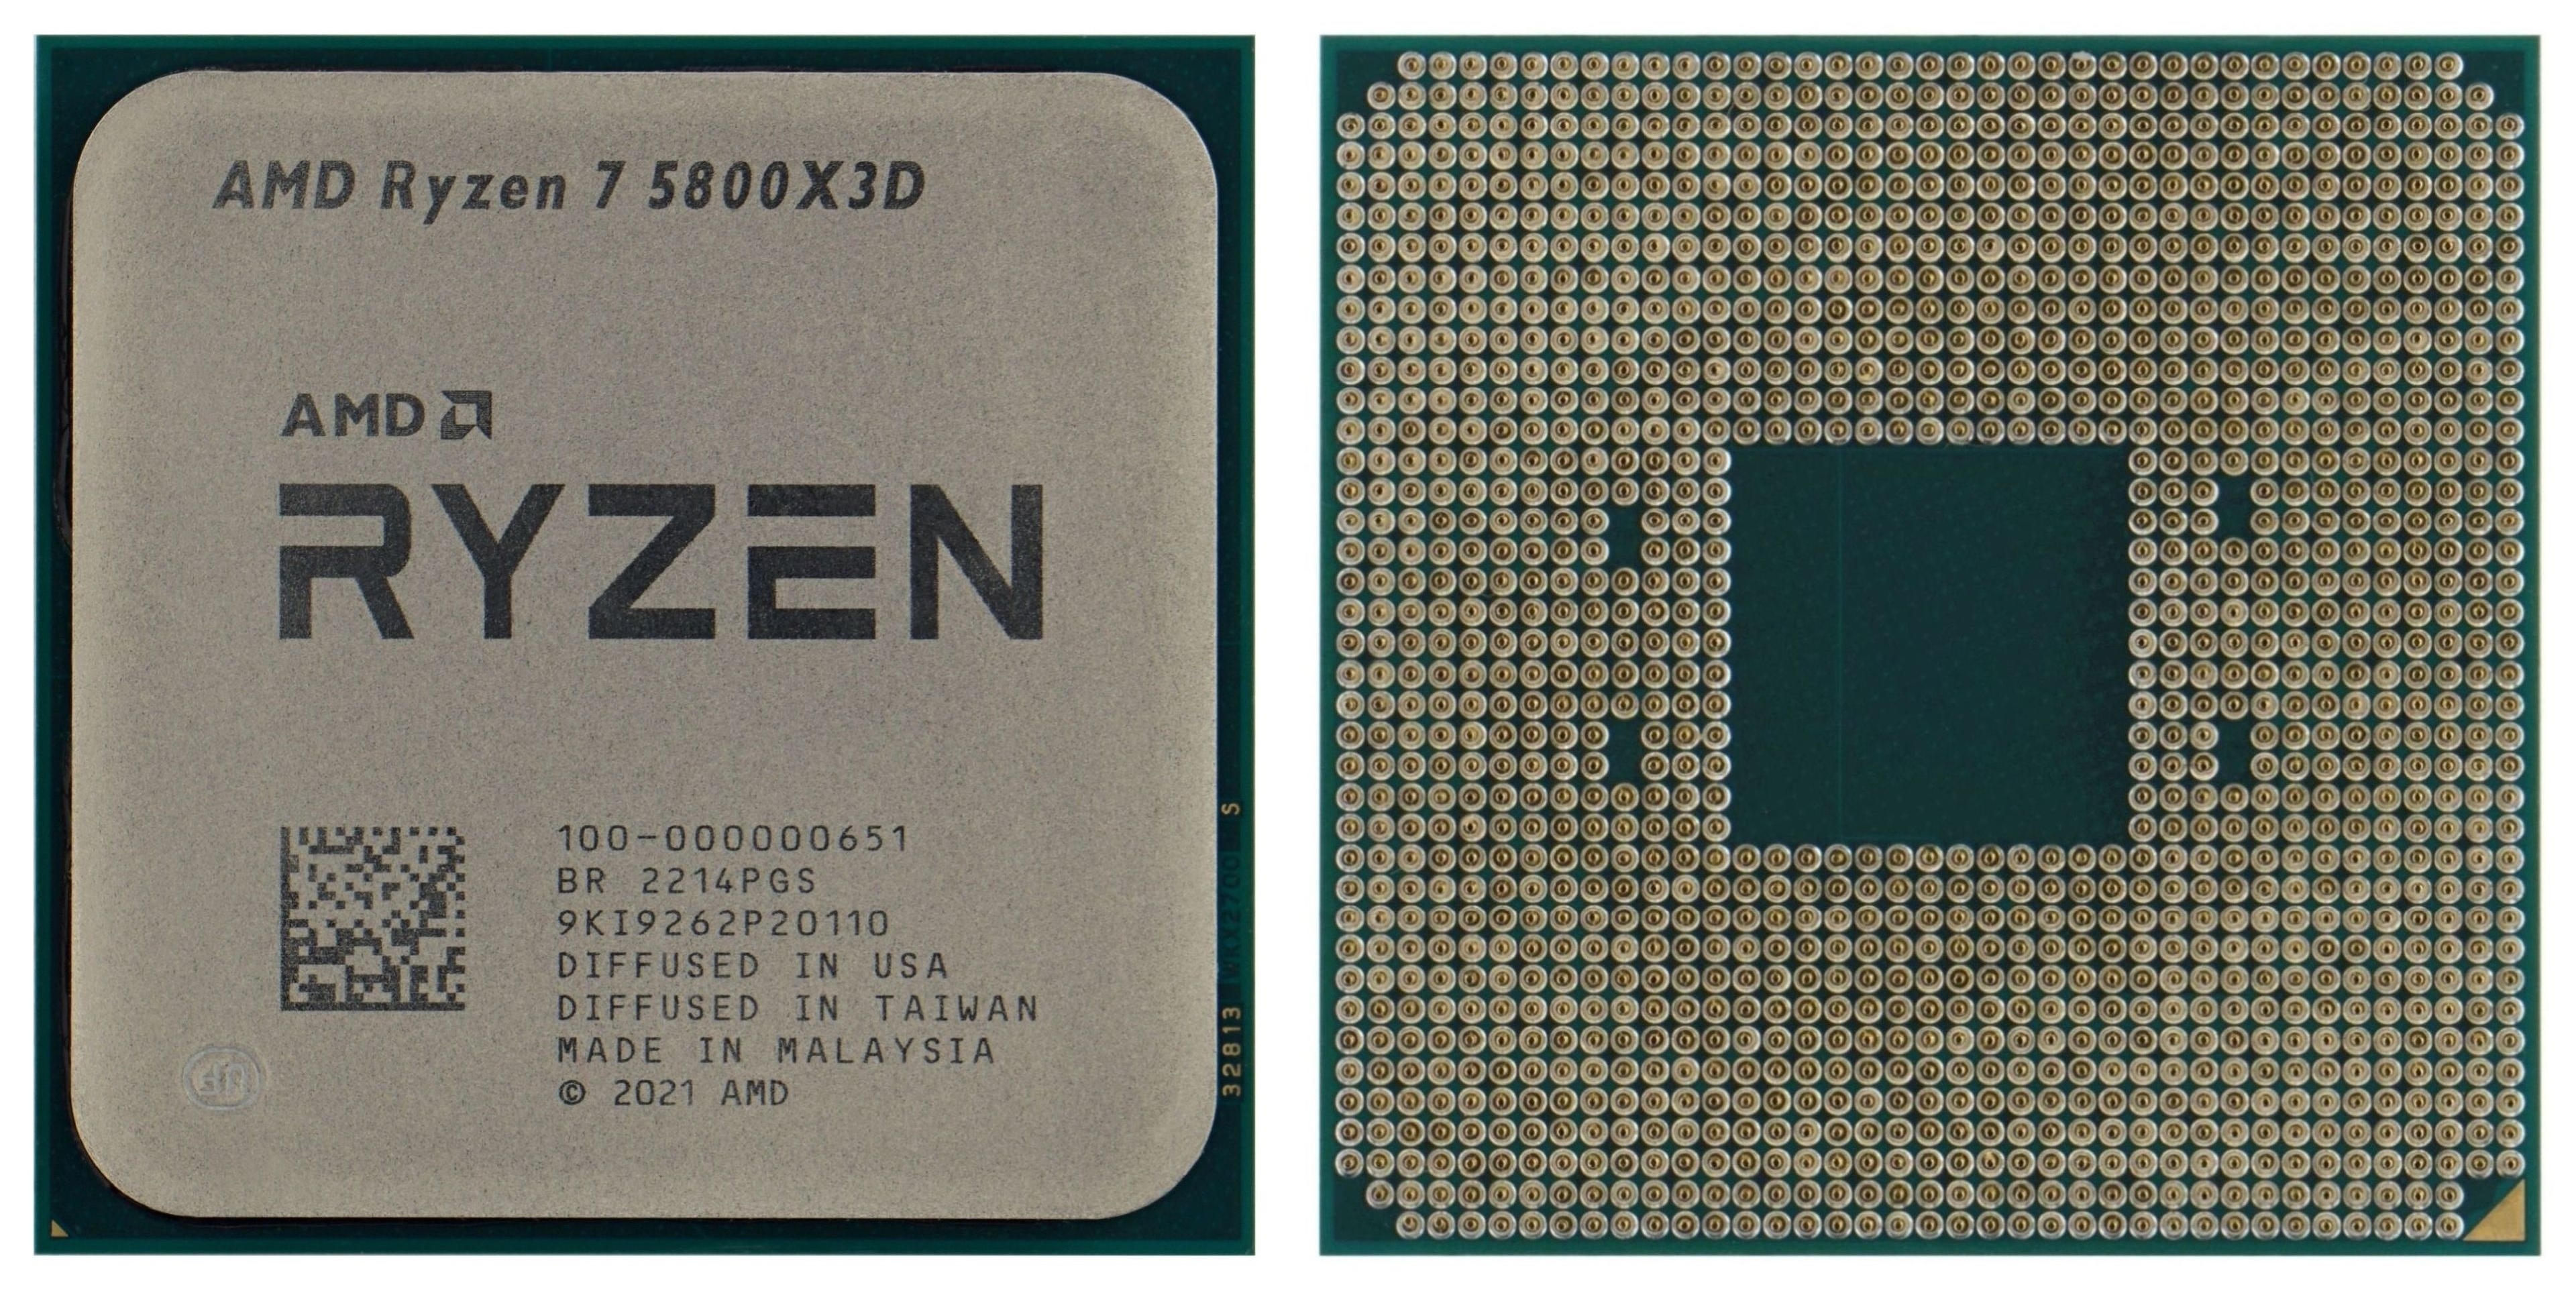 AMD Ryzen 7 5800X3D: Best for gaming? In practice, rarely